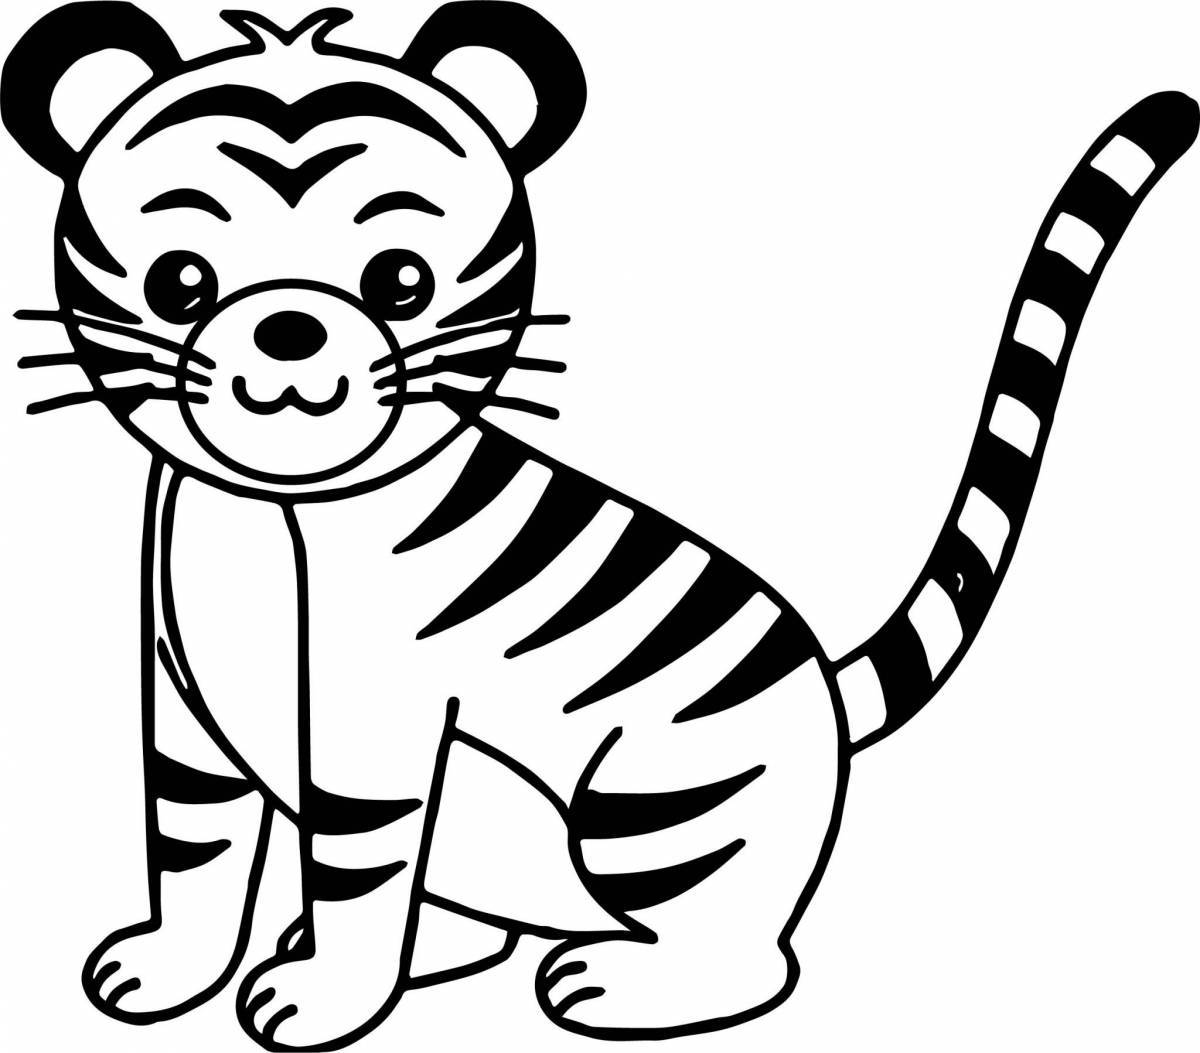 Coloring book wild tiger cub